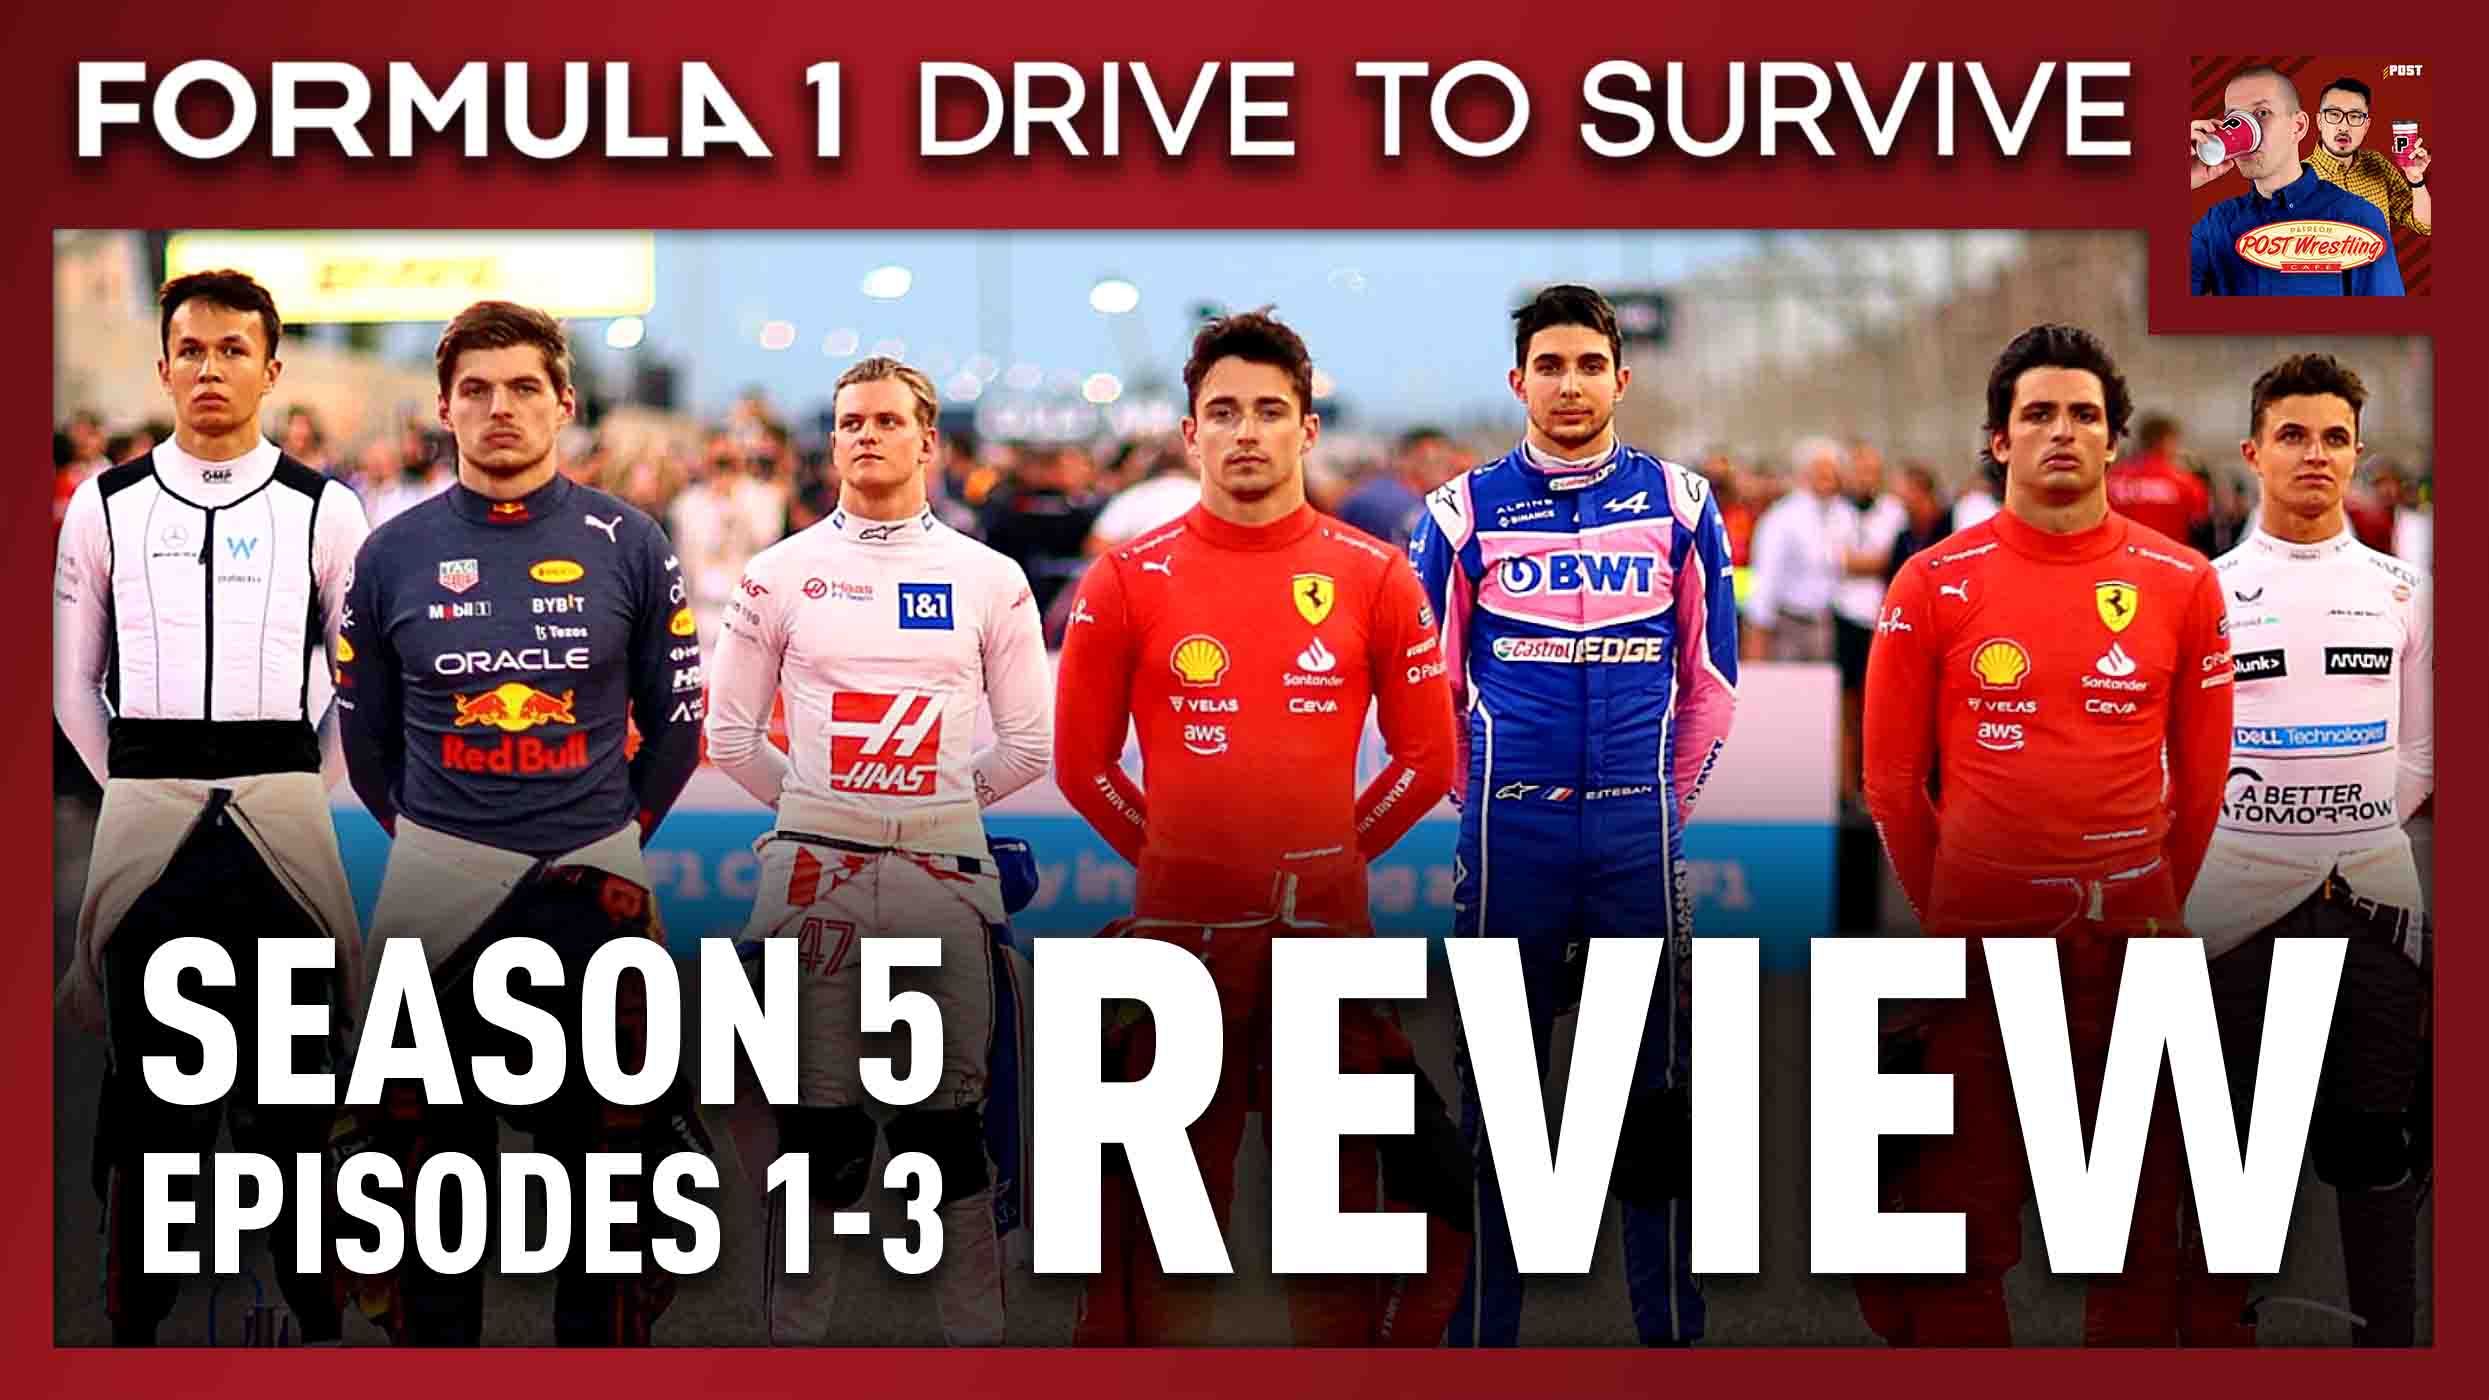 F1 Drive to Survive Season 5, Episodes 1-3 Review FREE